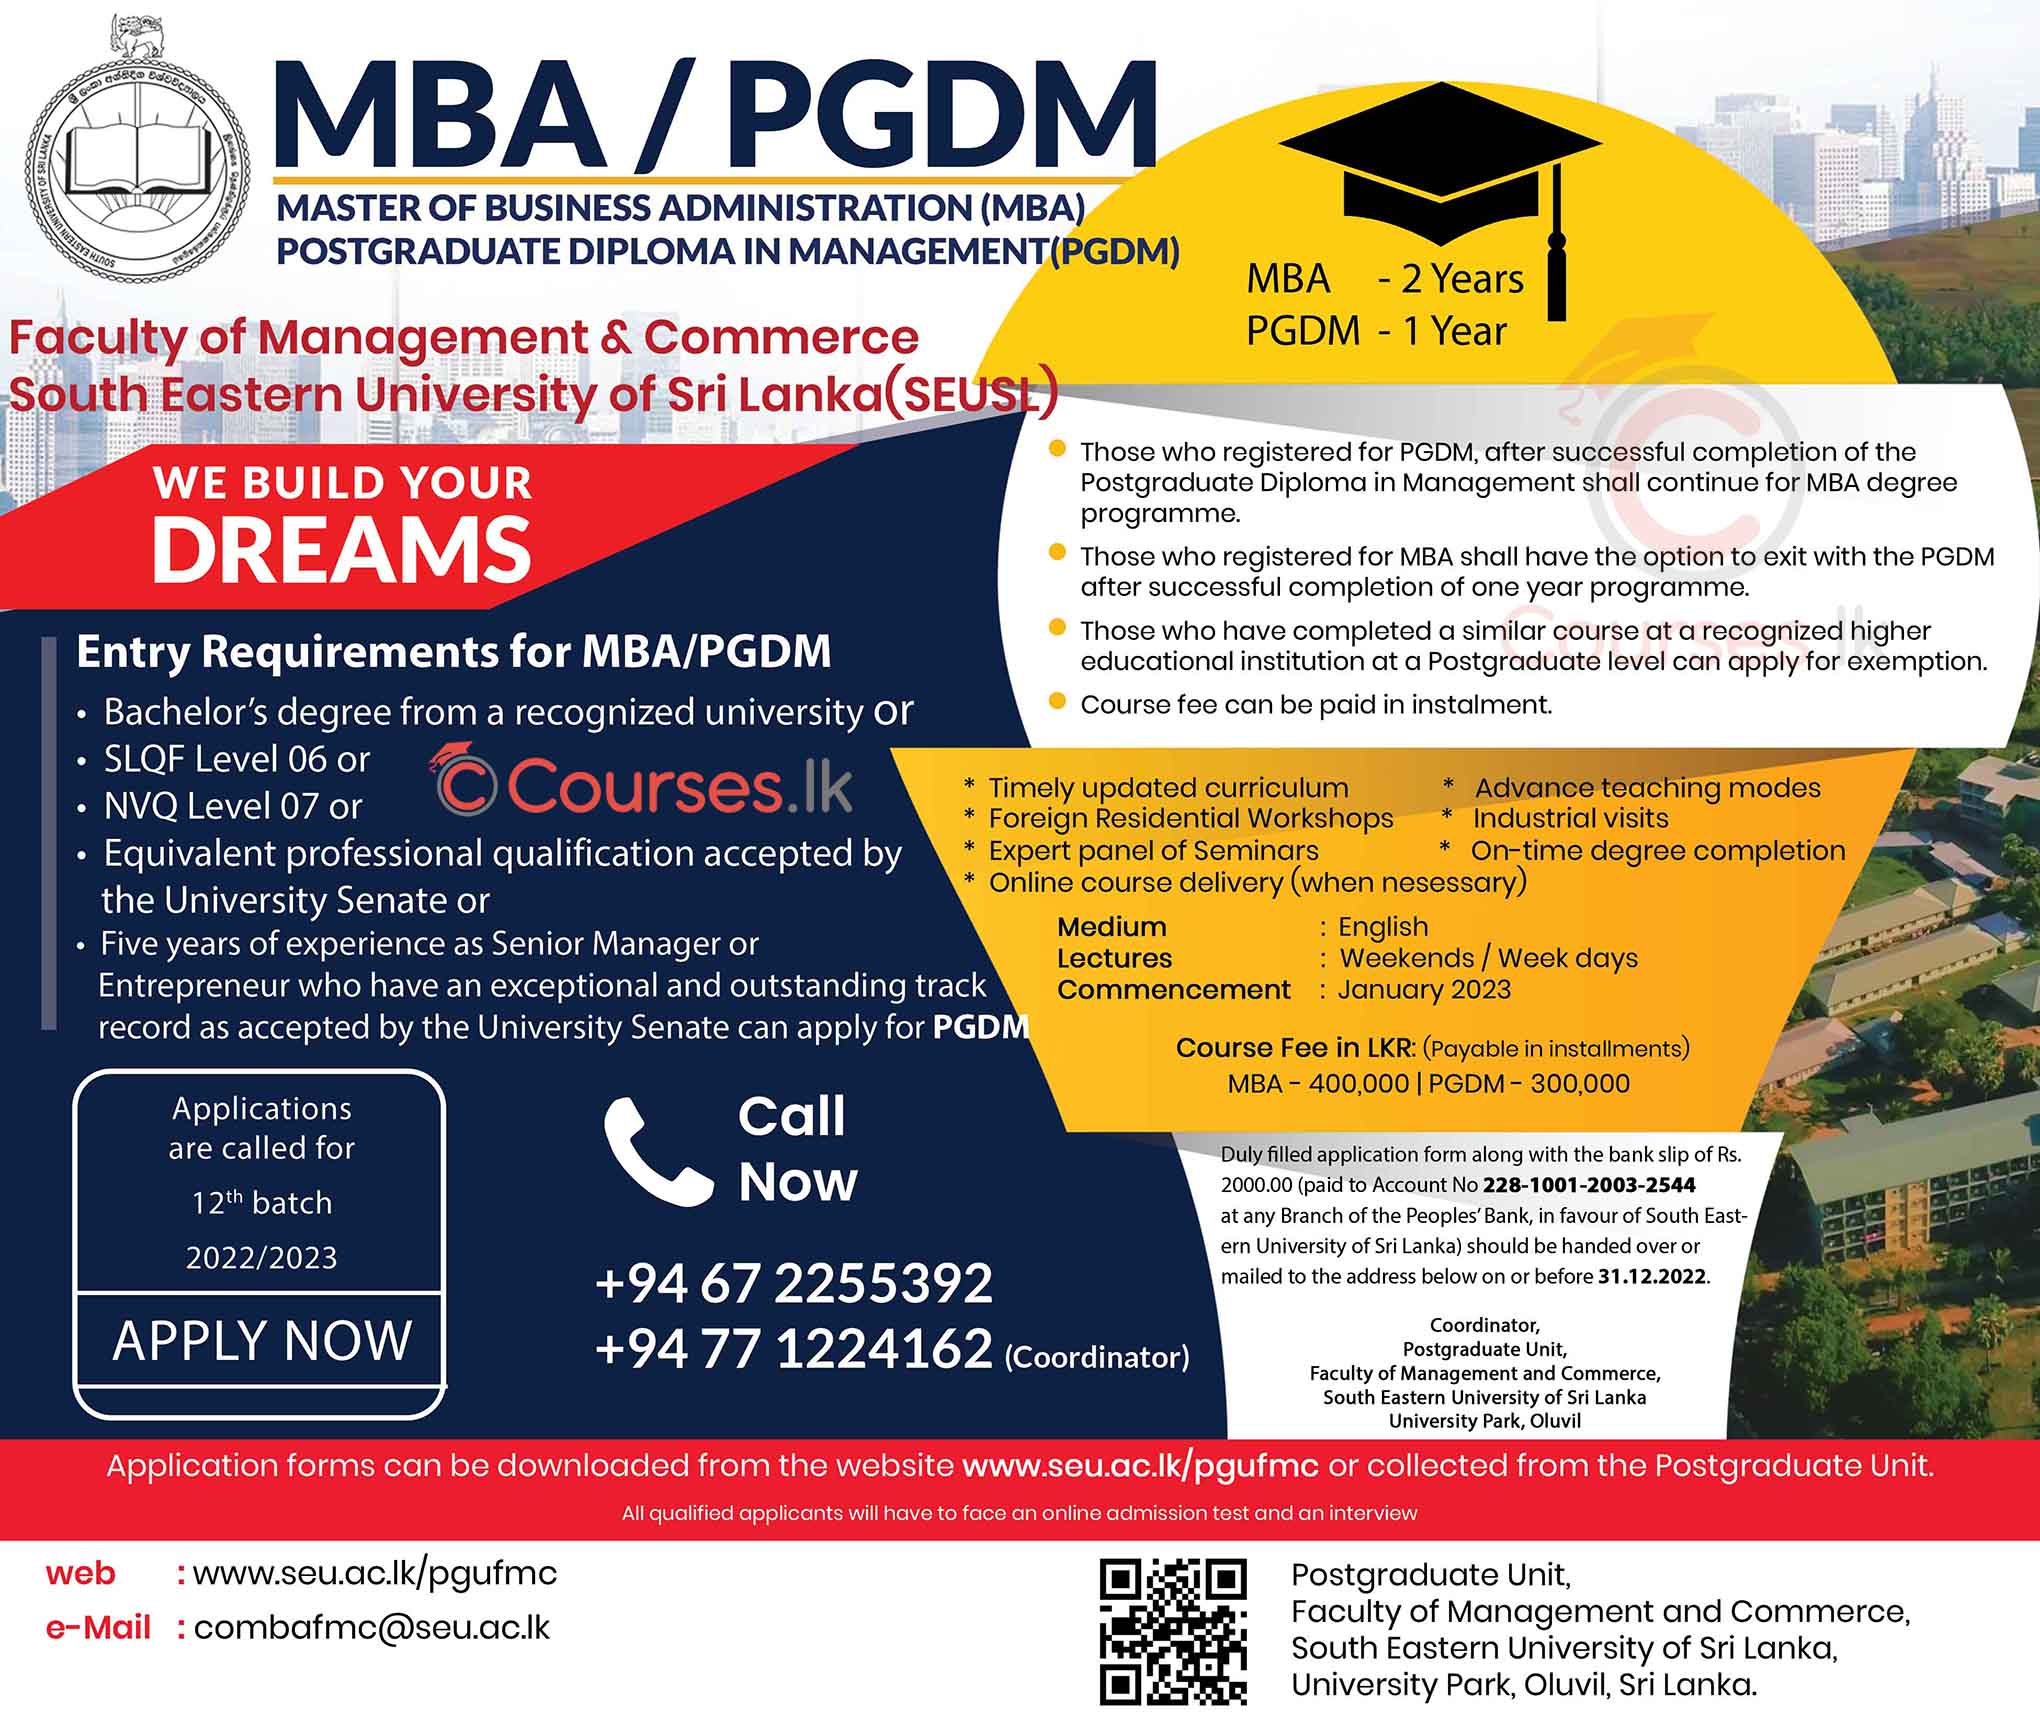 Master of Business Administration (MBA) / (PGDM) 2022/2023 - South Eastern University of Sri Lanka